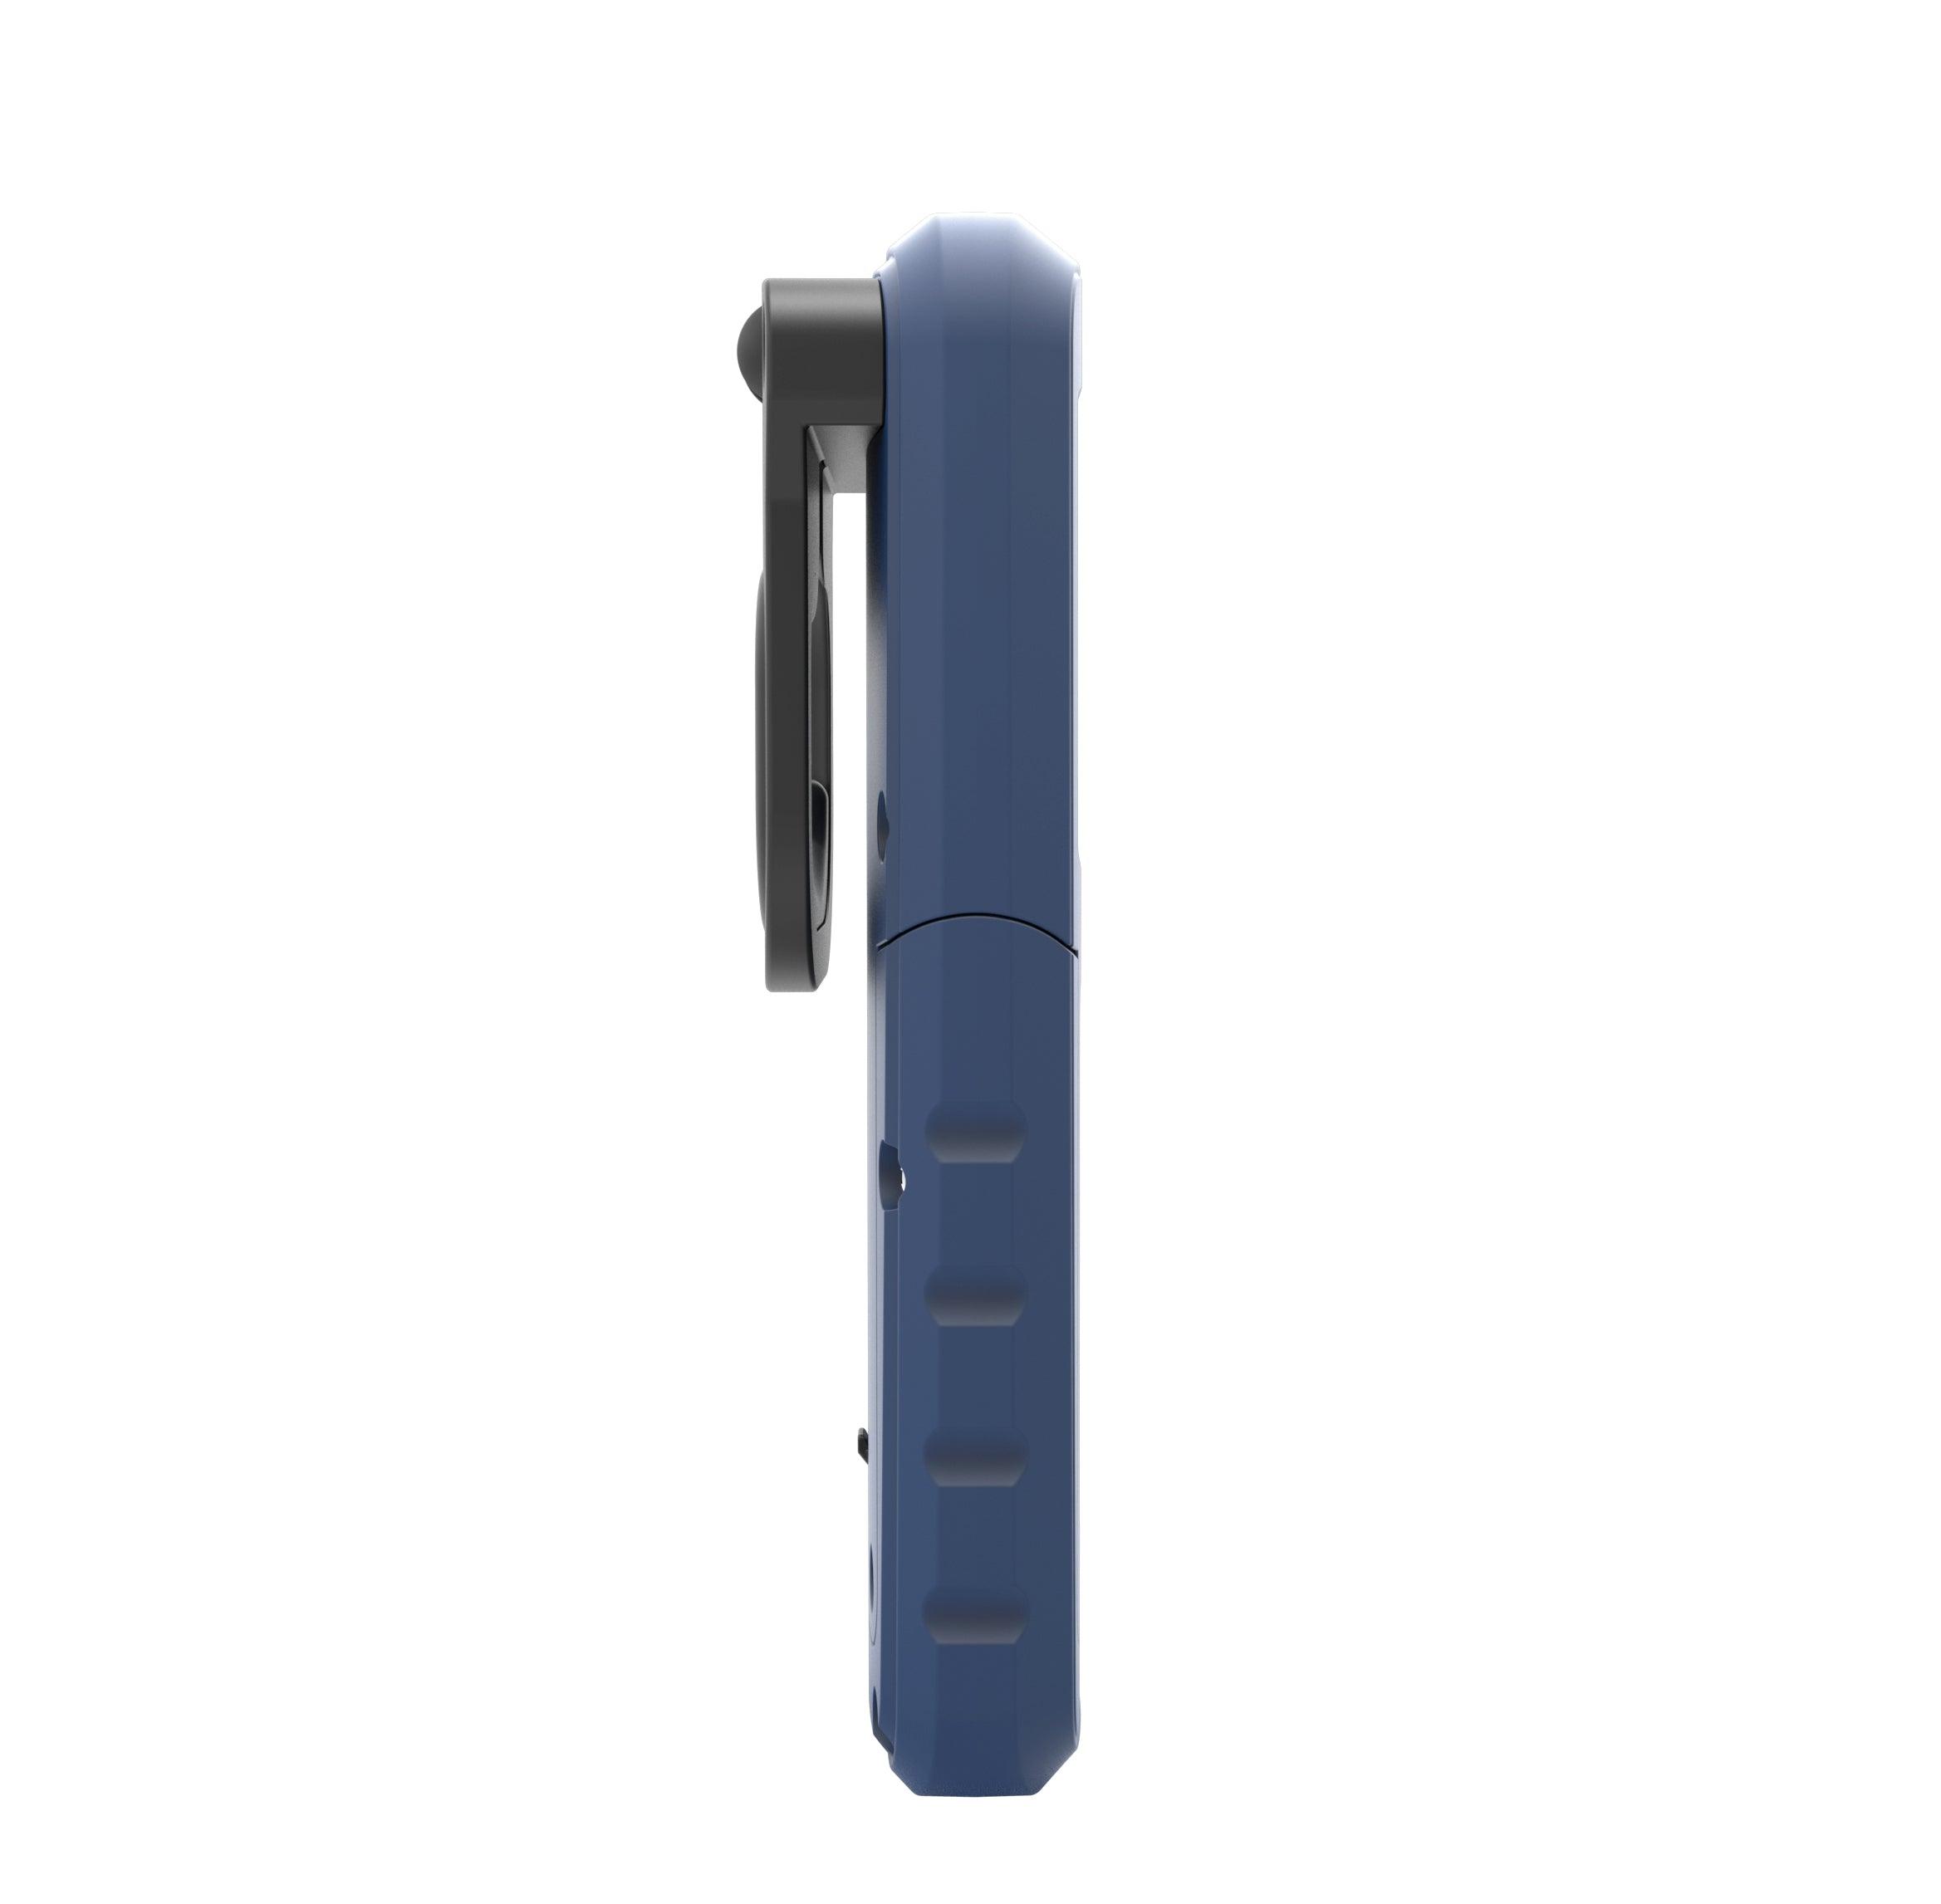 Miniform - Faro da lavoro Scangrip ultrasottile e ricaricabile con luce superiore.Scangrip Scangrip